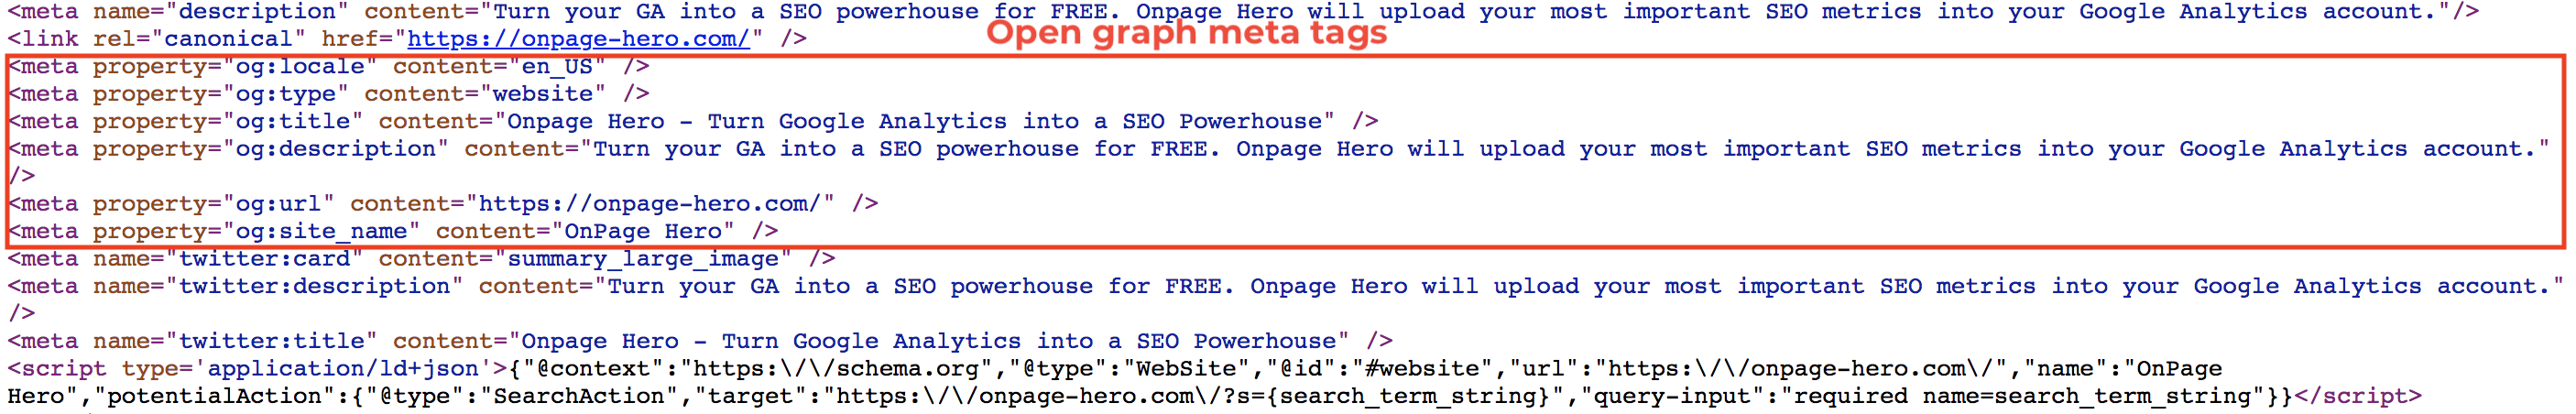 open graph meta tags